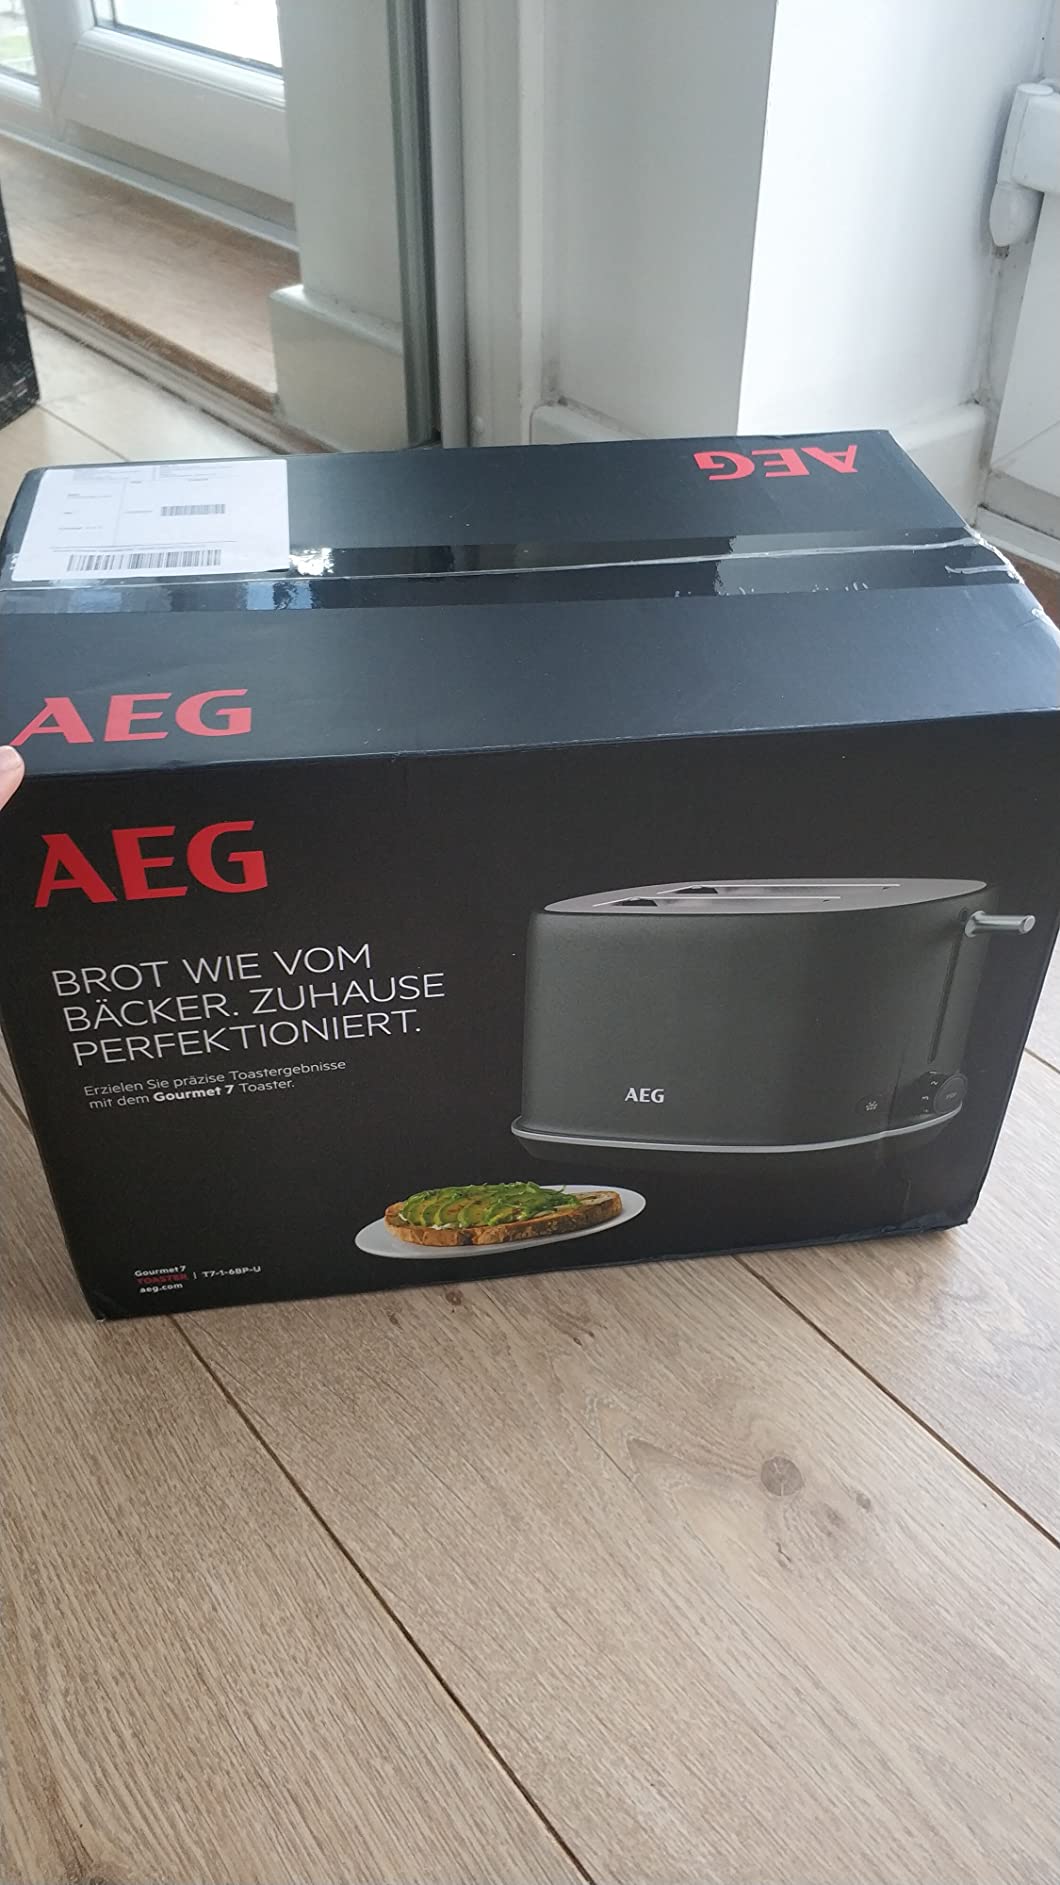  AEG toaster t7-1-6bp gourmet